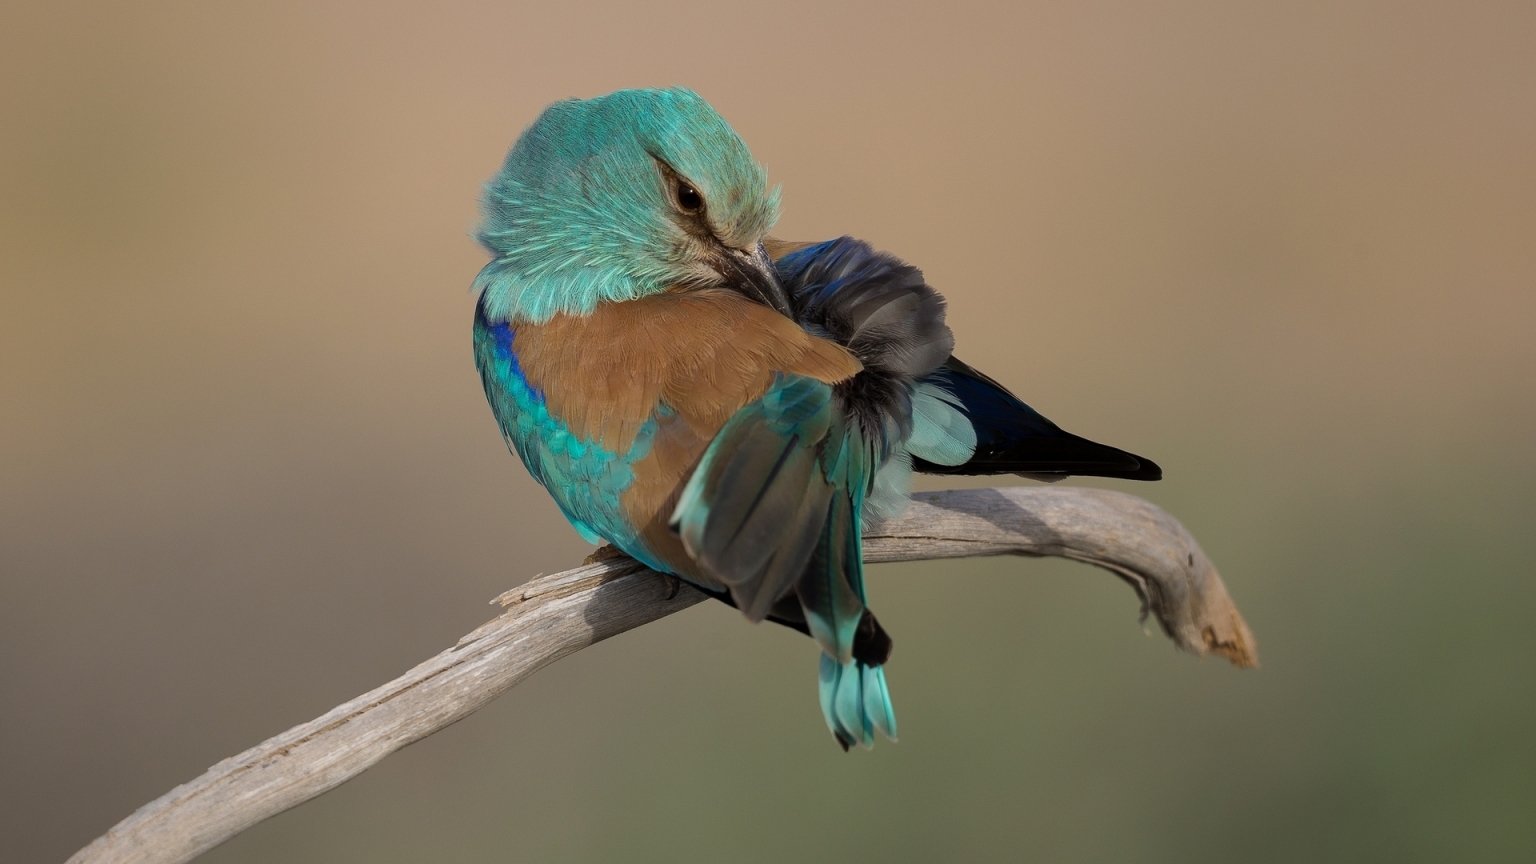 Turquoise Bird for 1536 x 864 HDTV resolution